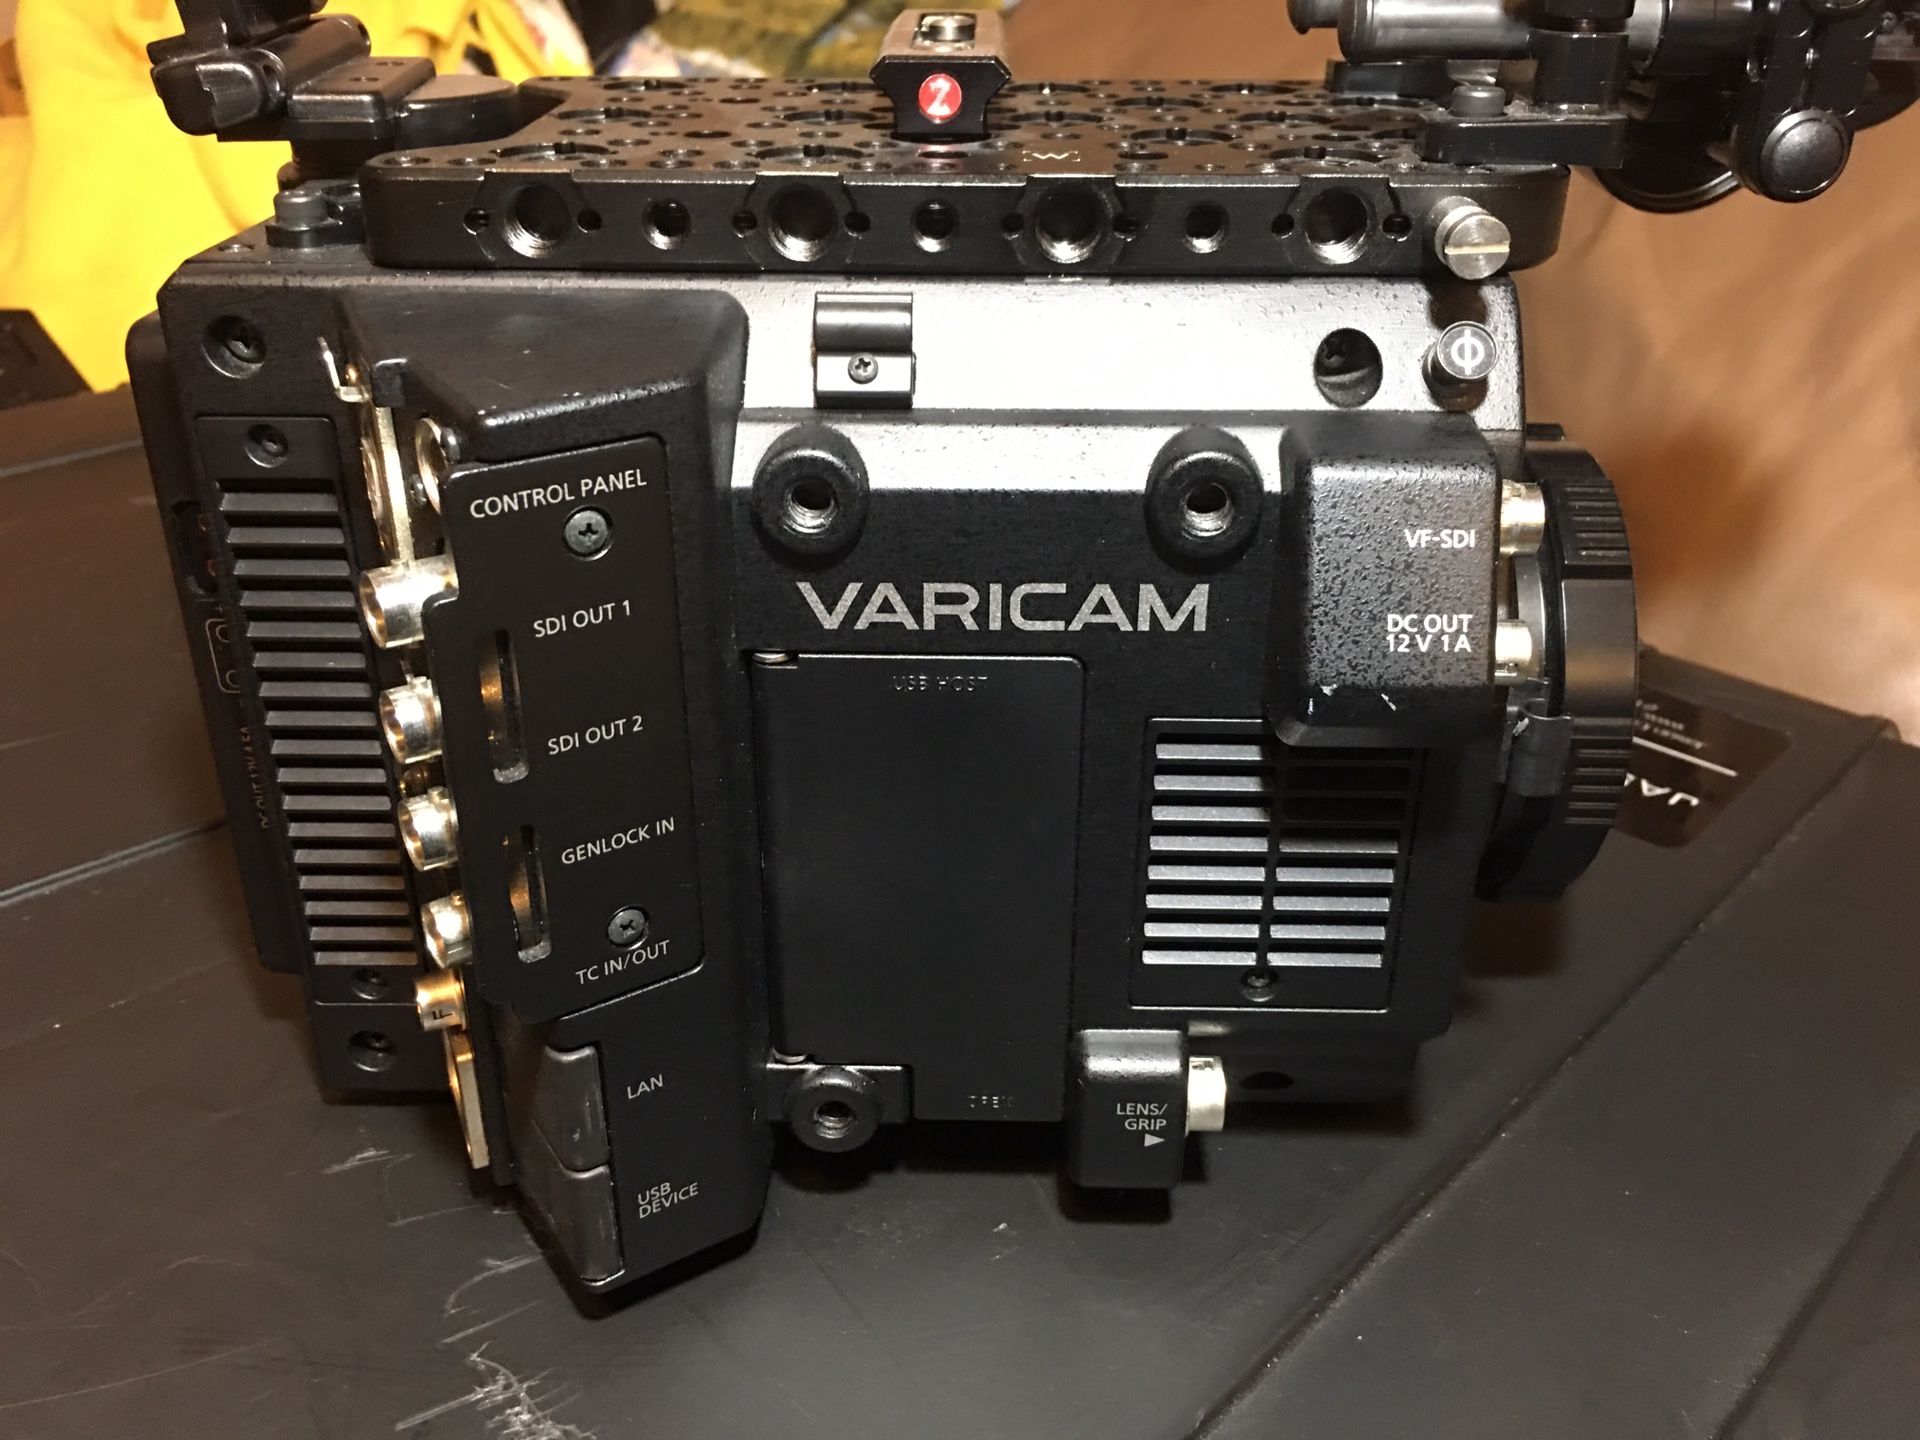 Panasonic Varicam LT camcorder Camera - BARELY USED - large package